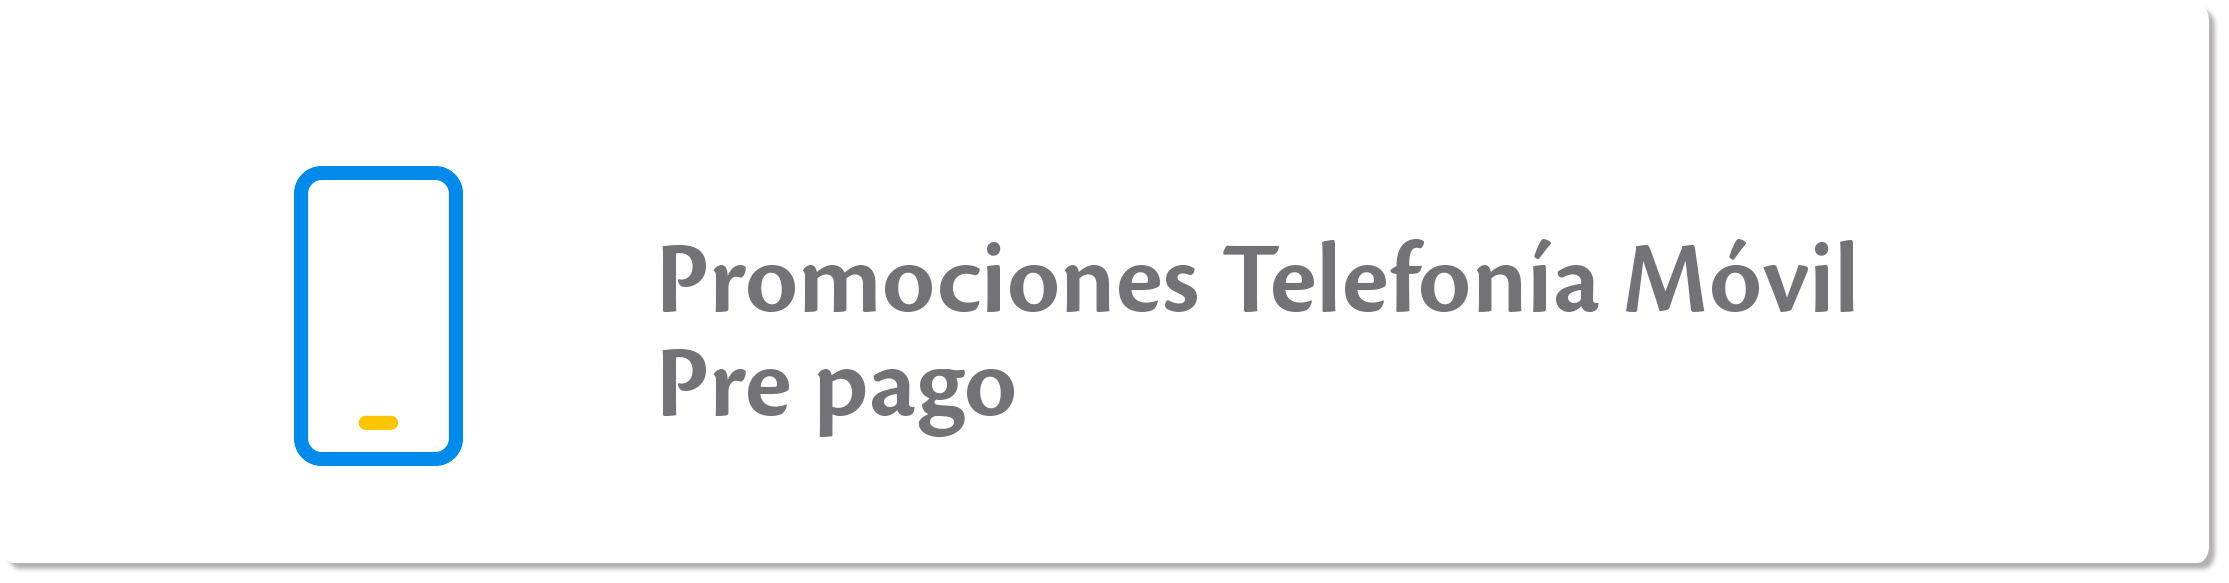 aw-promociones_telefonia_Pre_pago.png